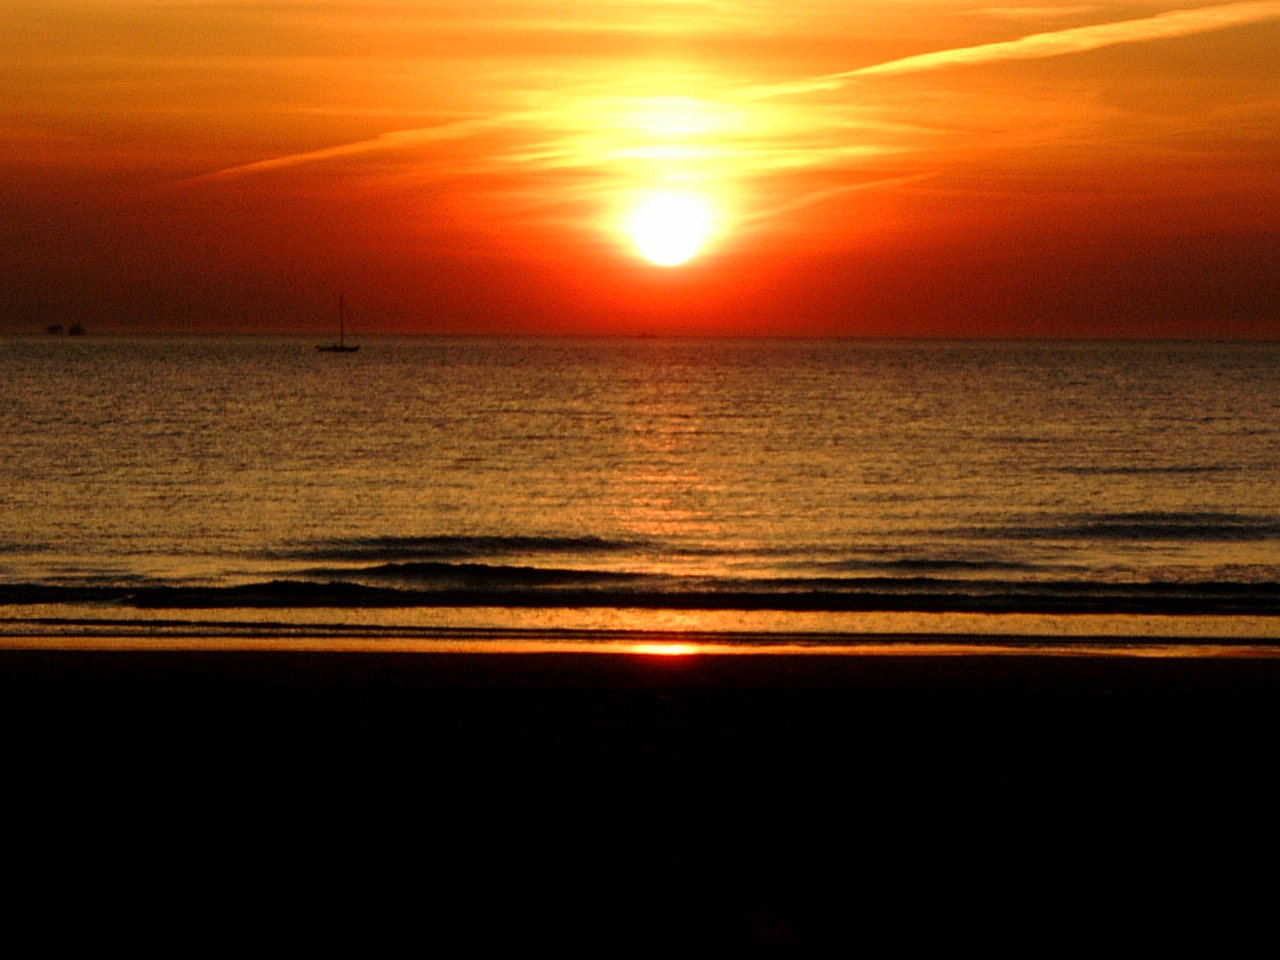 sun sunset set setting sea horizon evening red sky at night beach waves romantic romantical shine shining